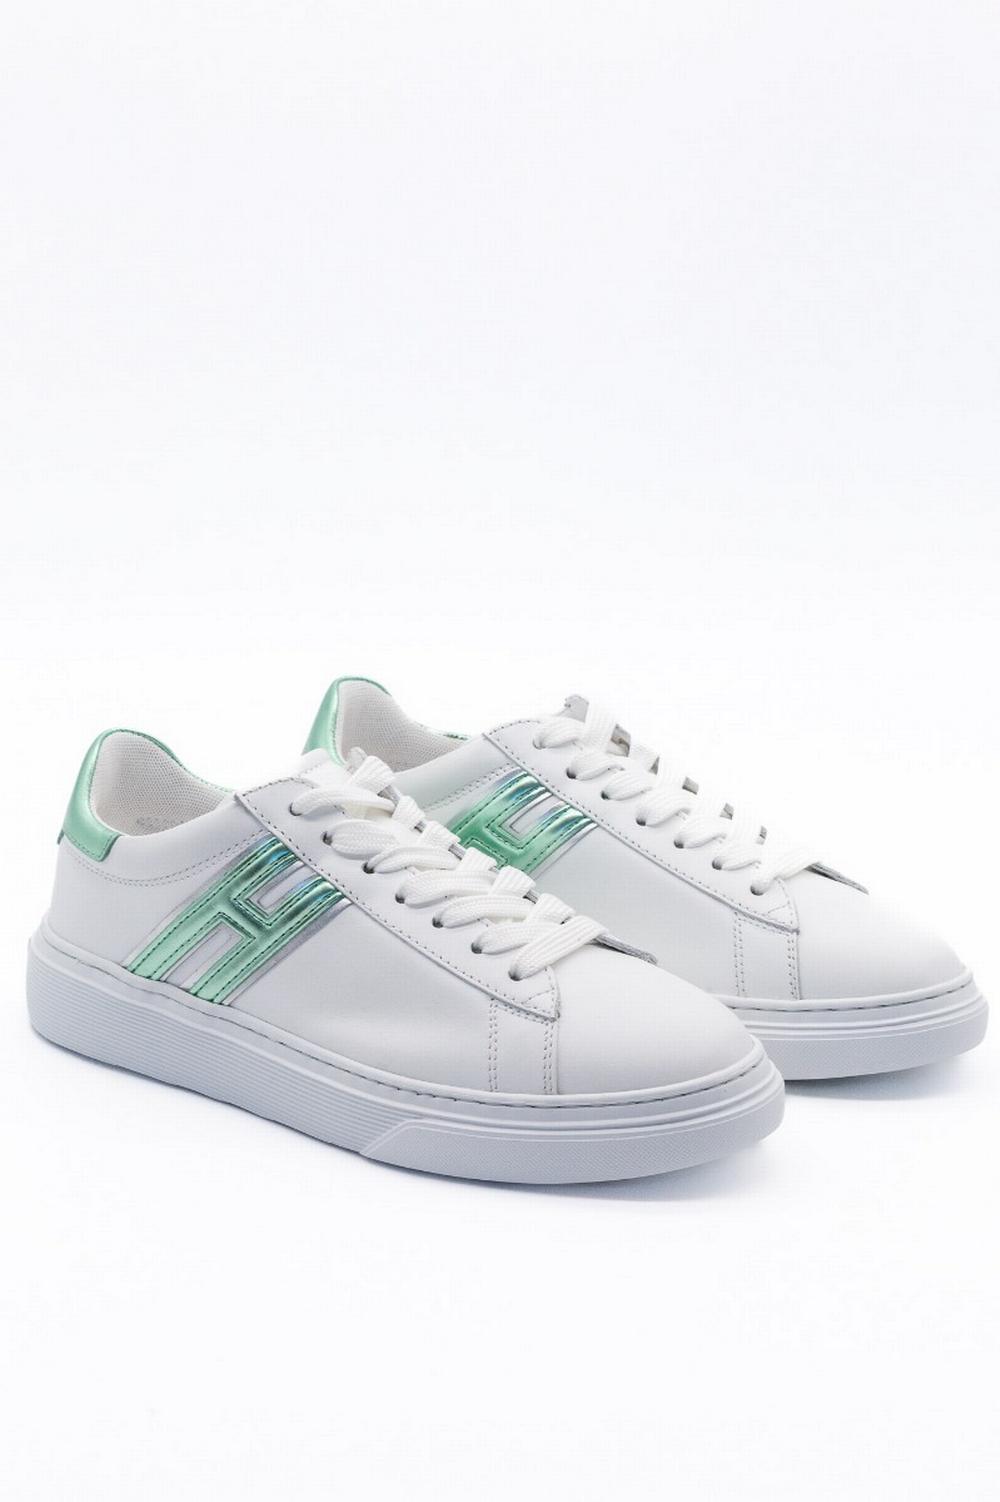 Hogan - Sneaker H365 Bianco/Verde Donna - HXW3650J310RMW0RUO